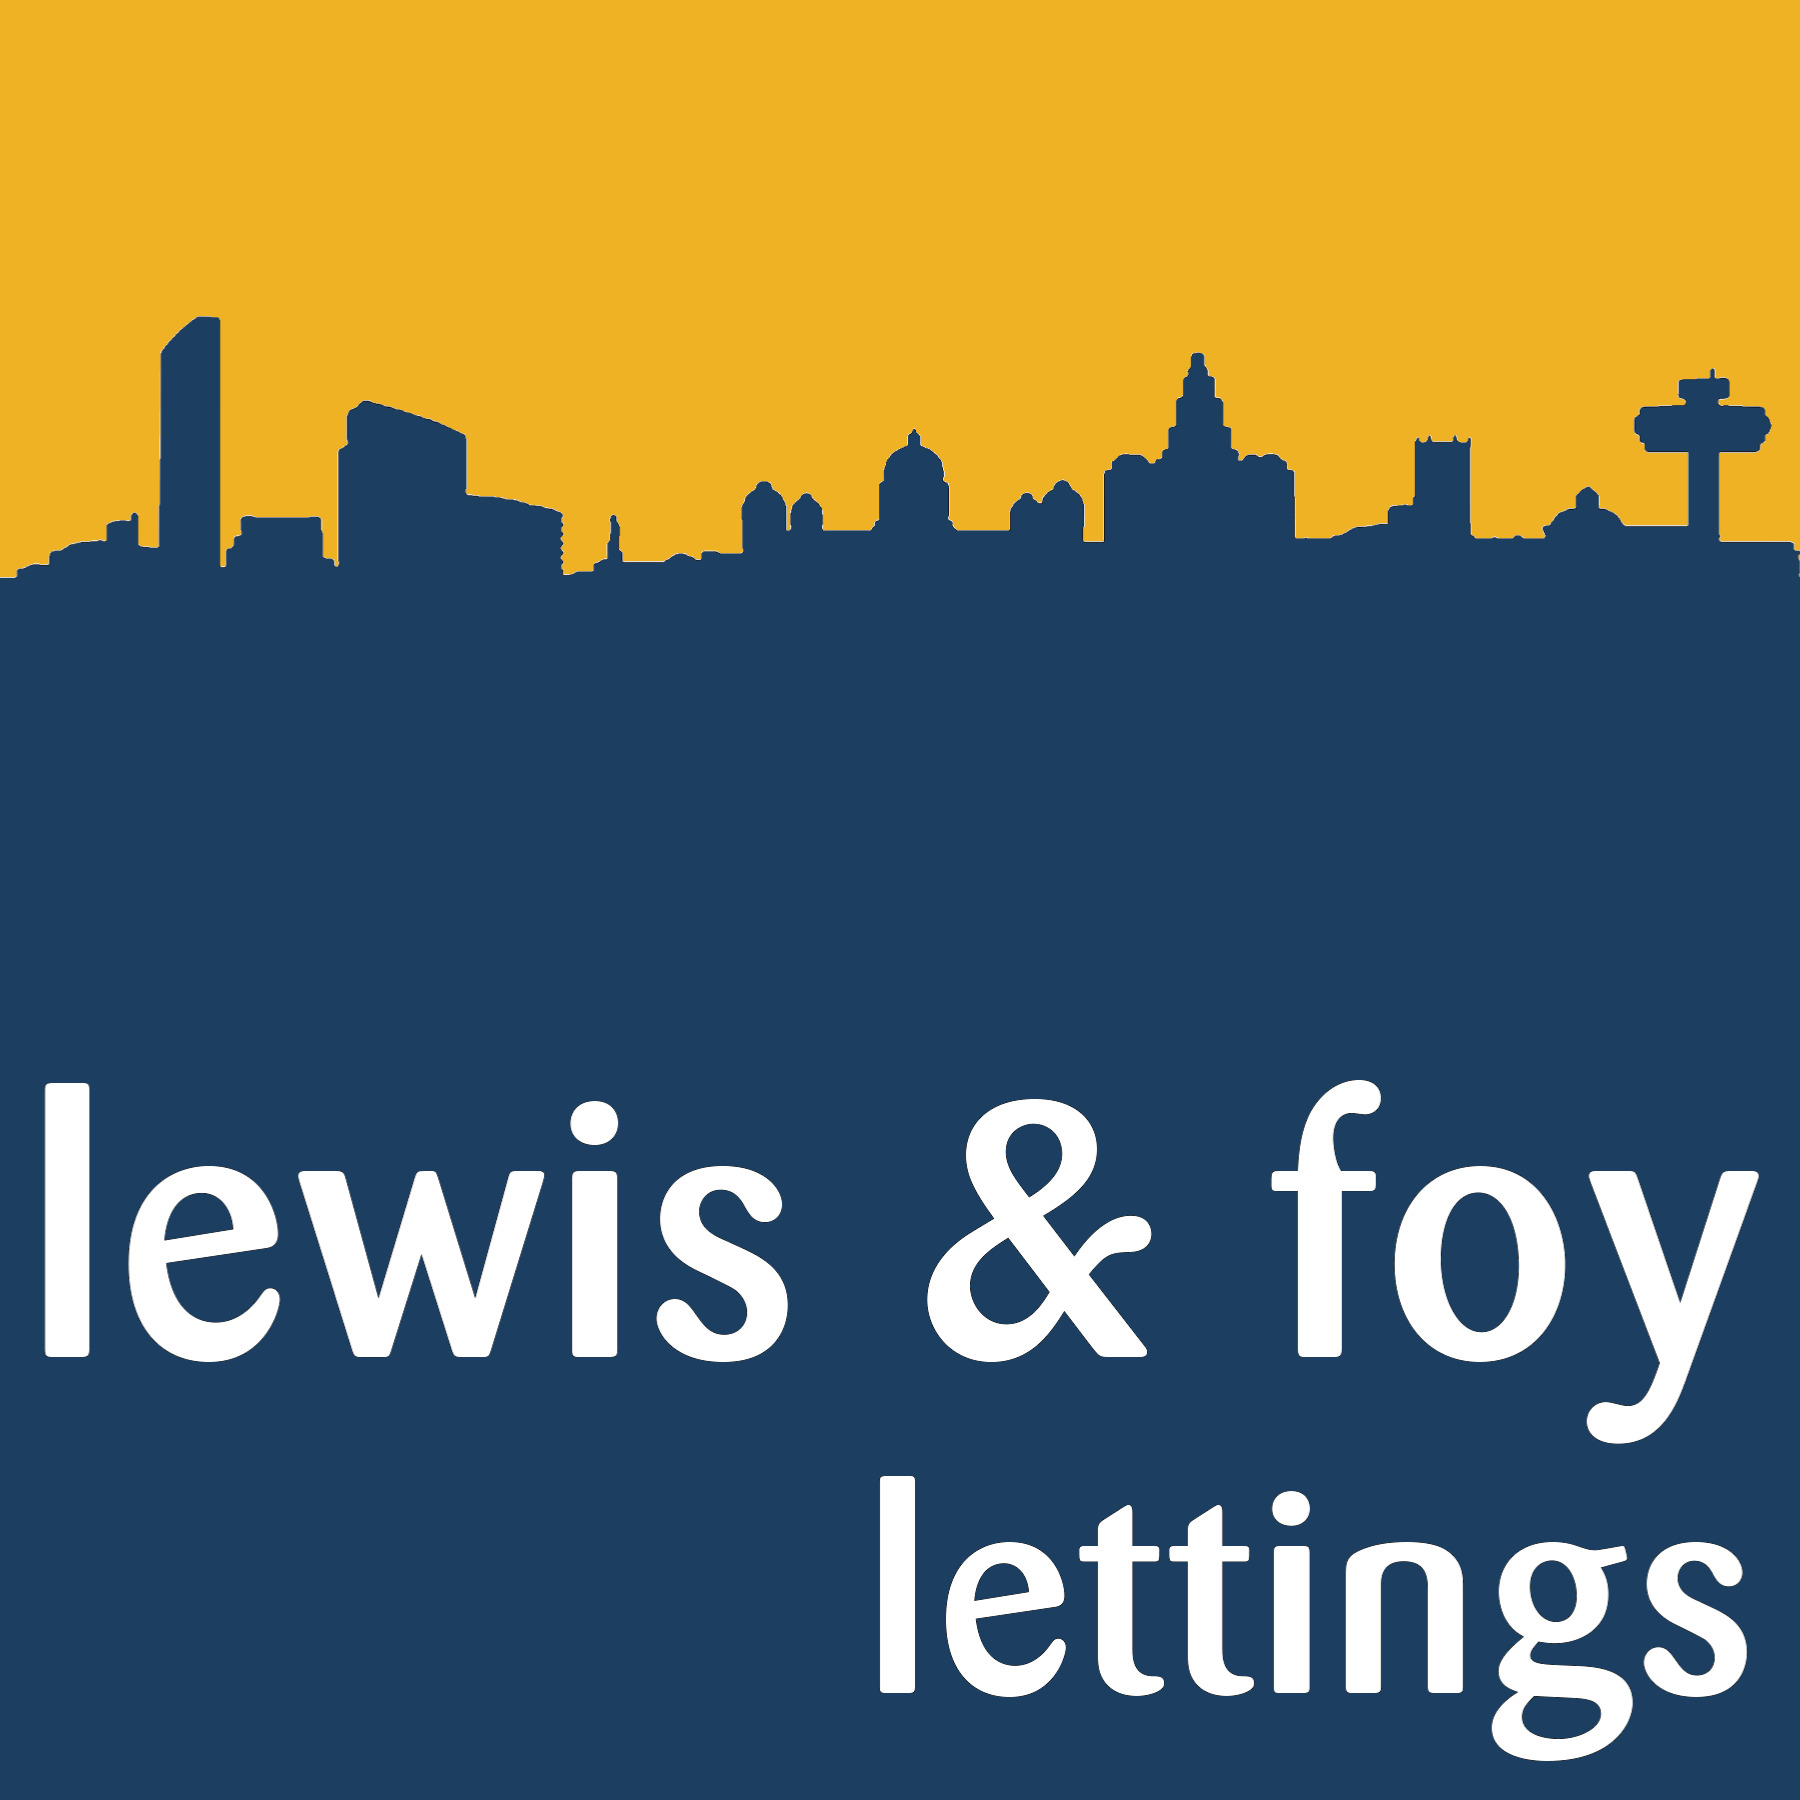 Lewis & Foy Lettings - Liverpool, Merseyside L8 5RW - 01514 386473 | ShowMeLocal.com